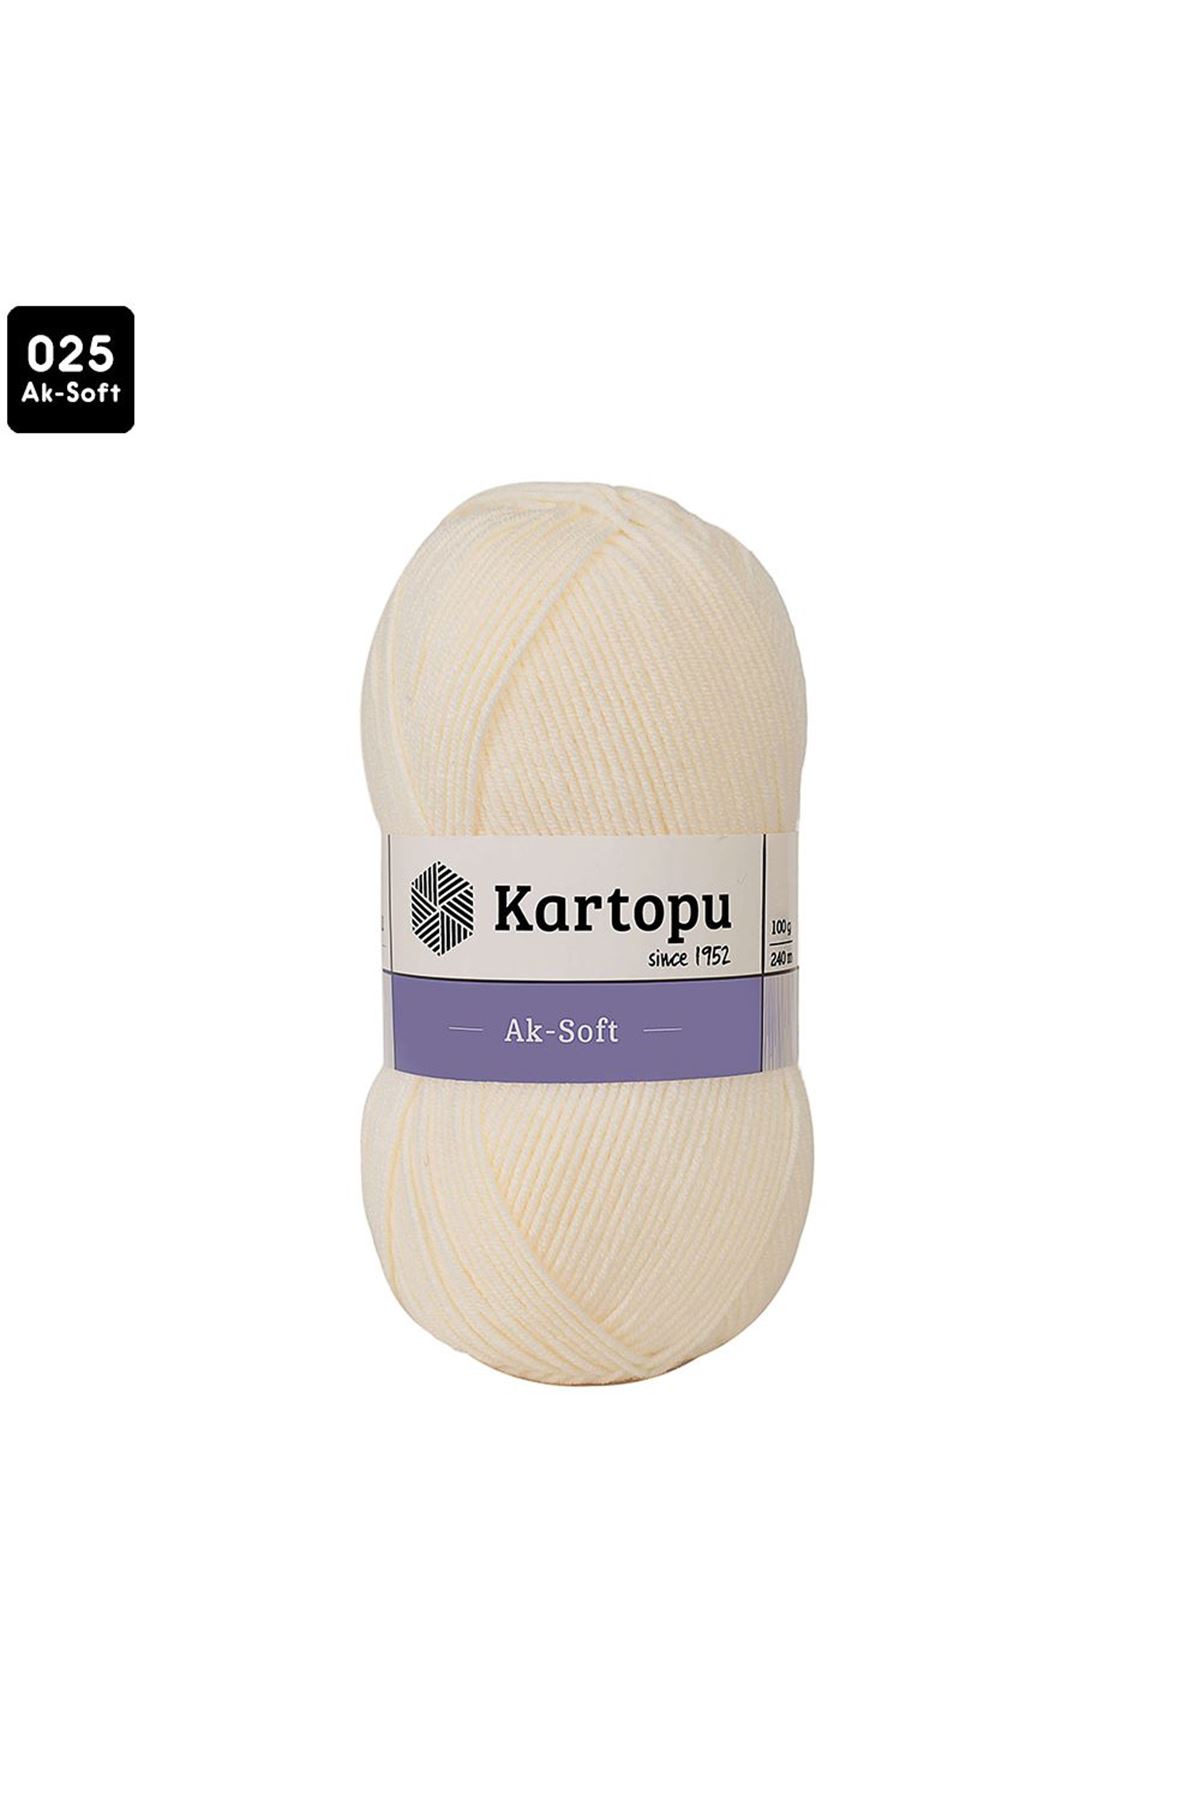 Kartopu Ak-Soft Renk No:025